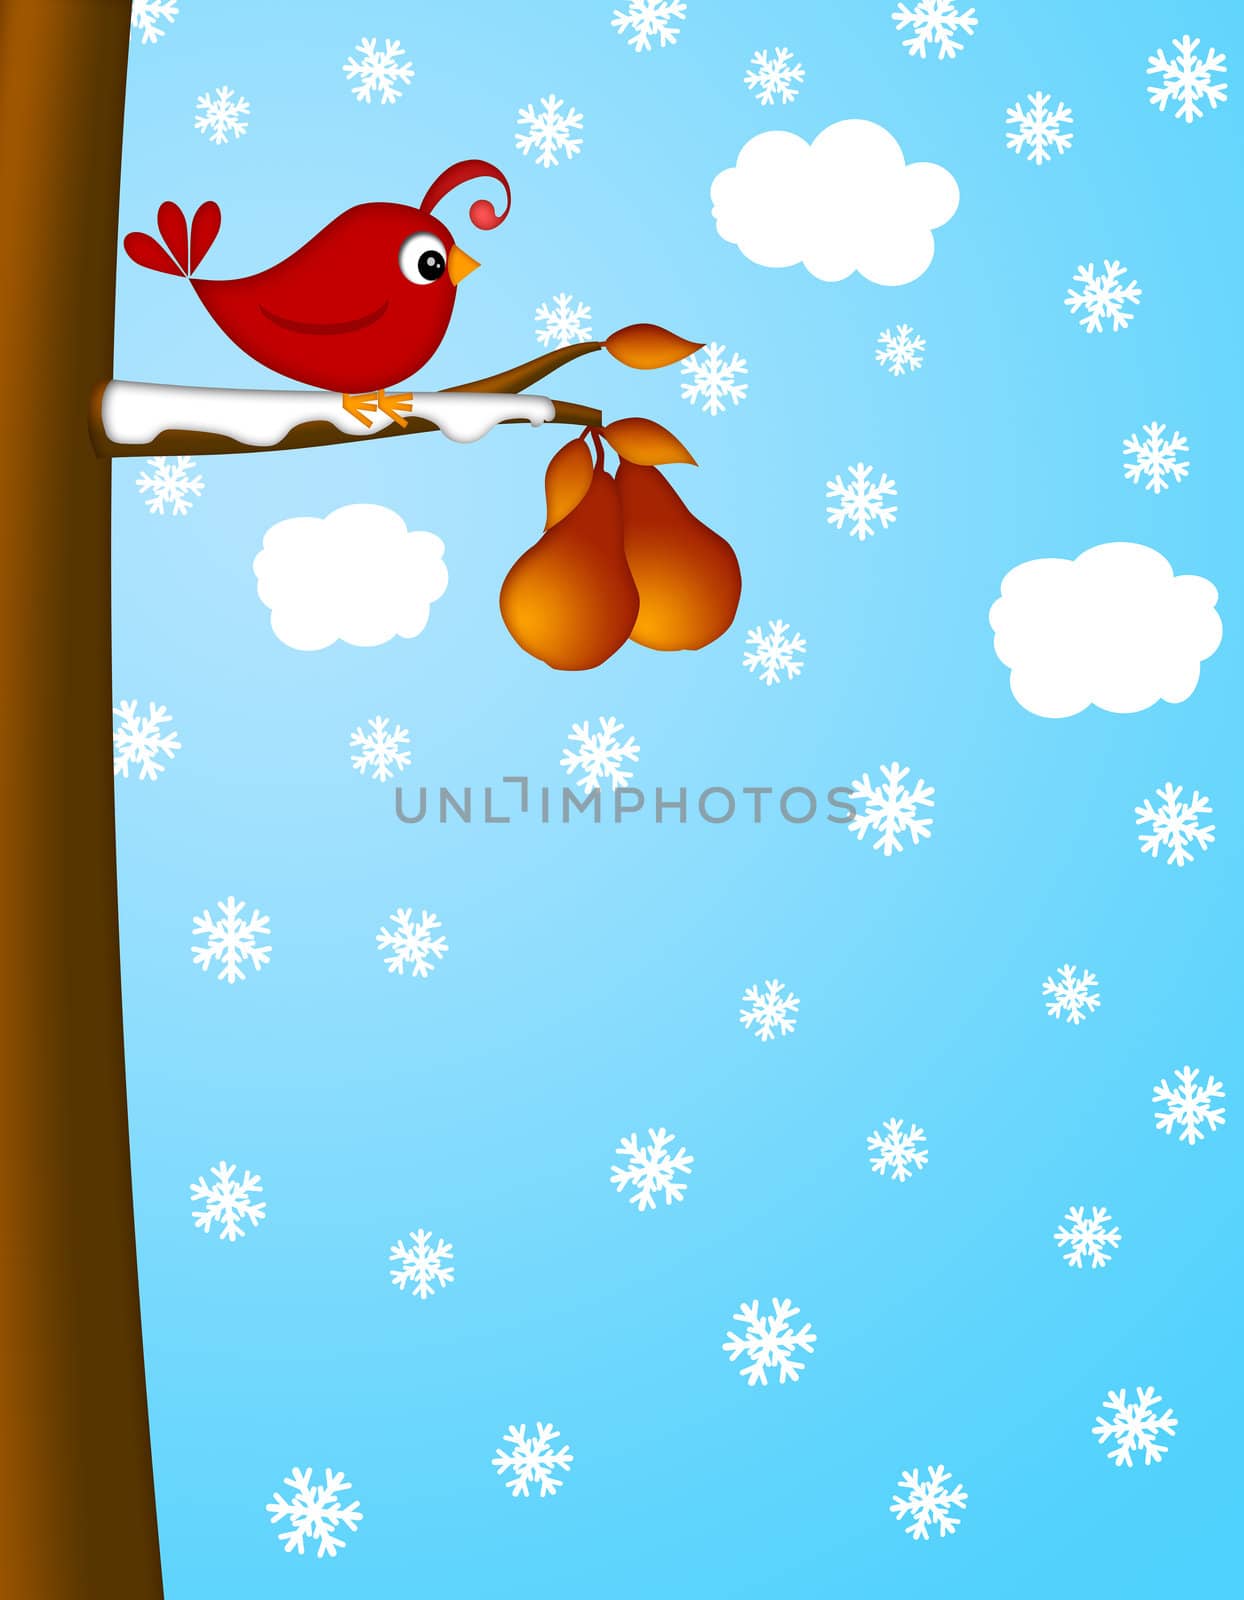 Christmas Partridge on a Pear Tree Winter Scene Illustration